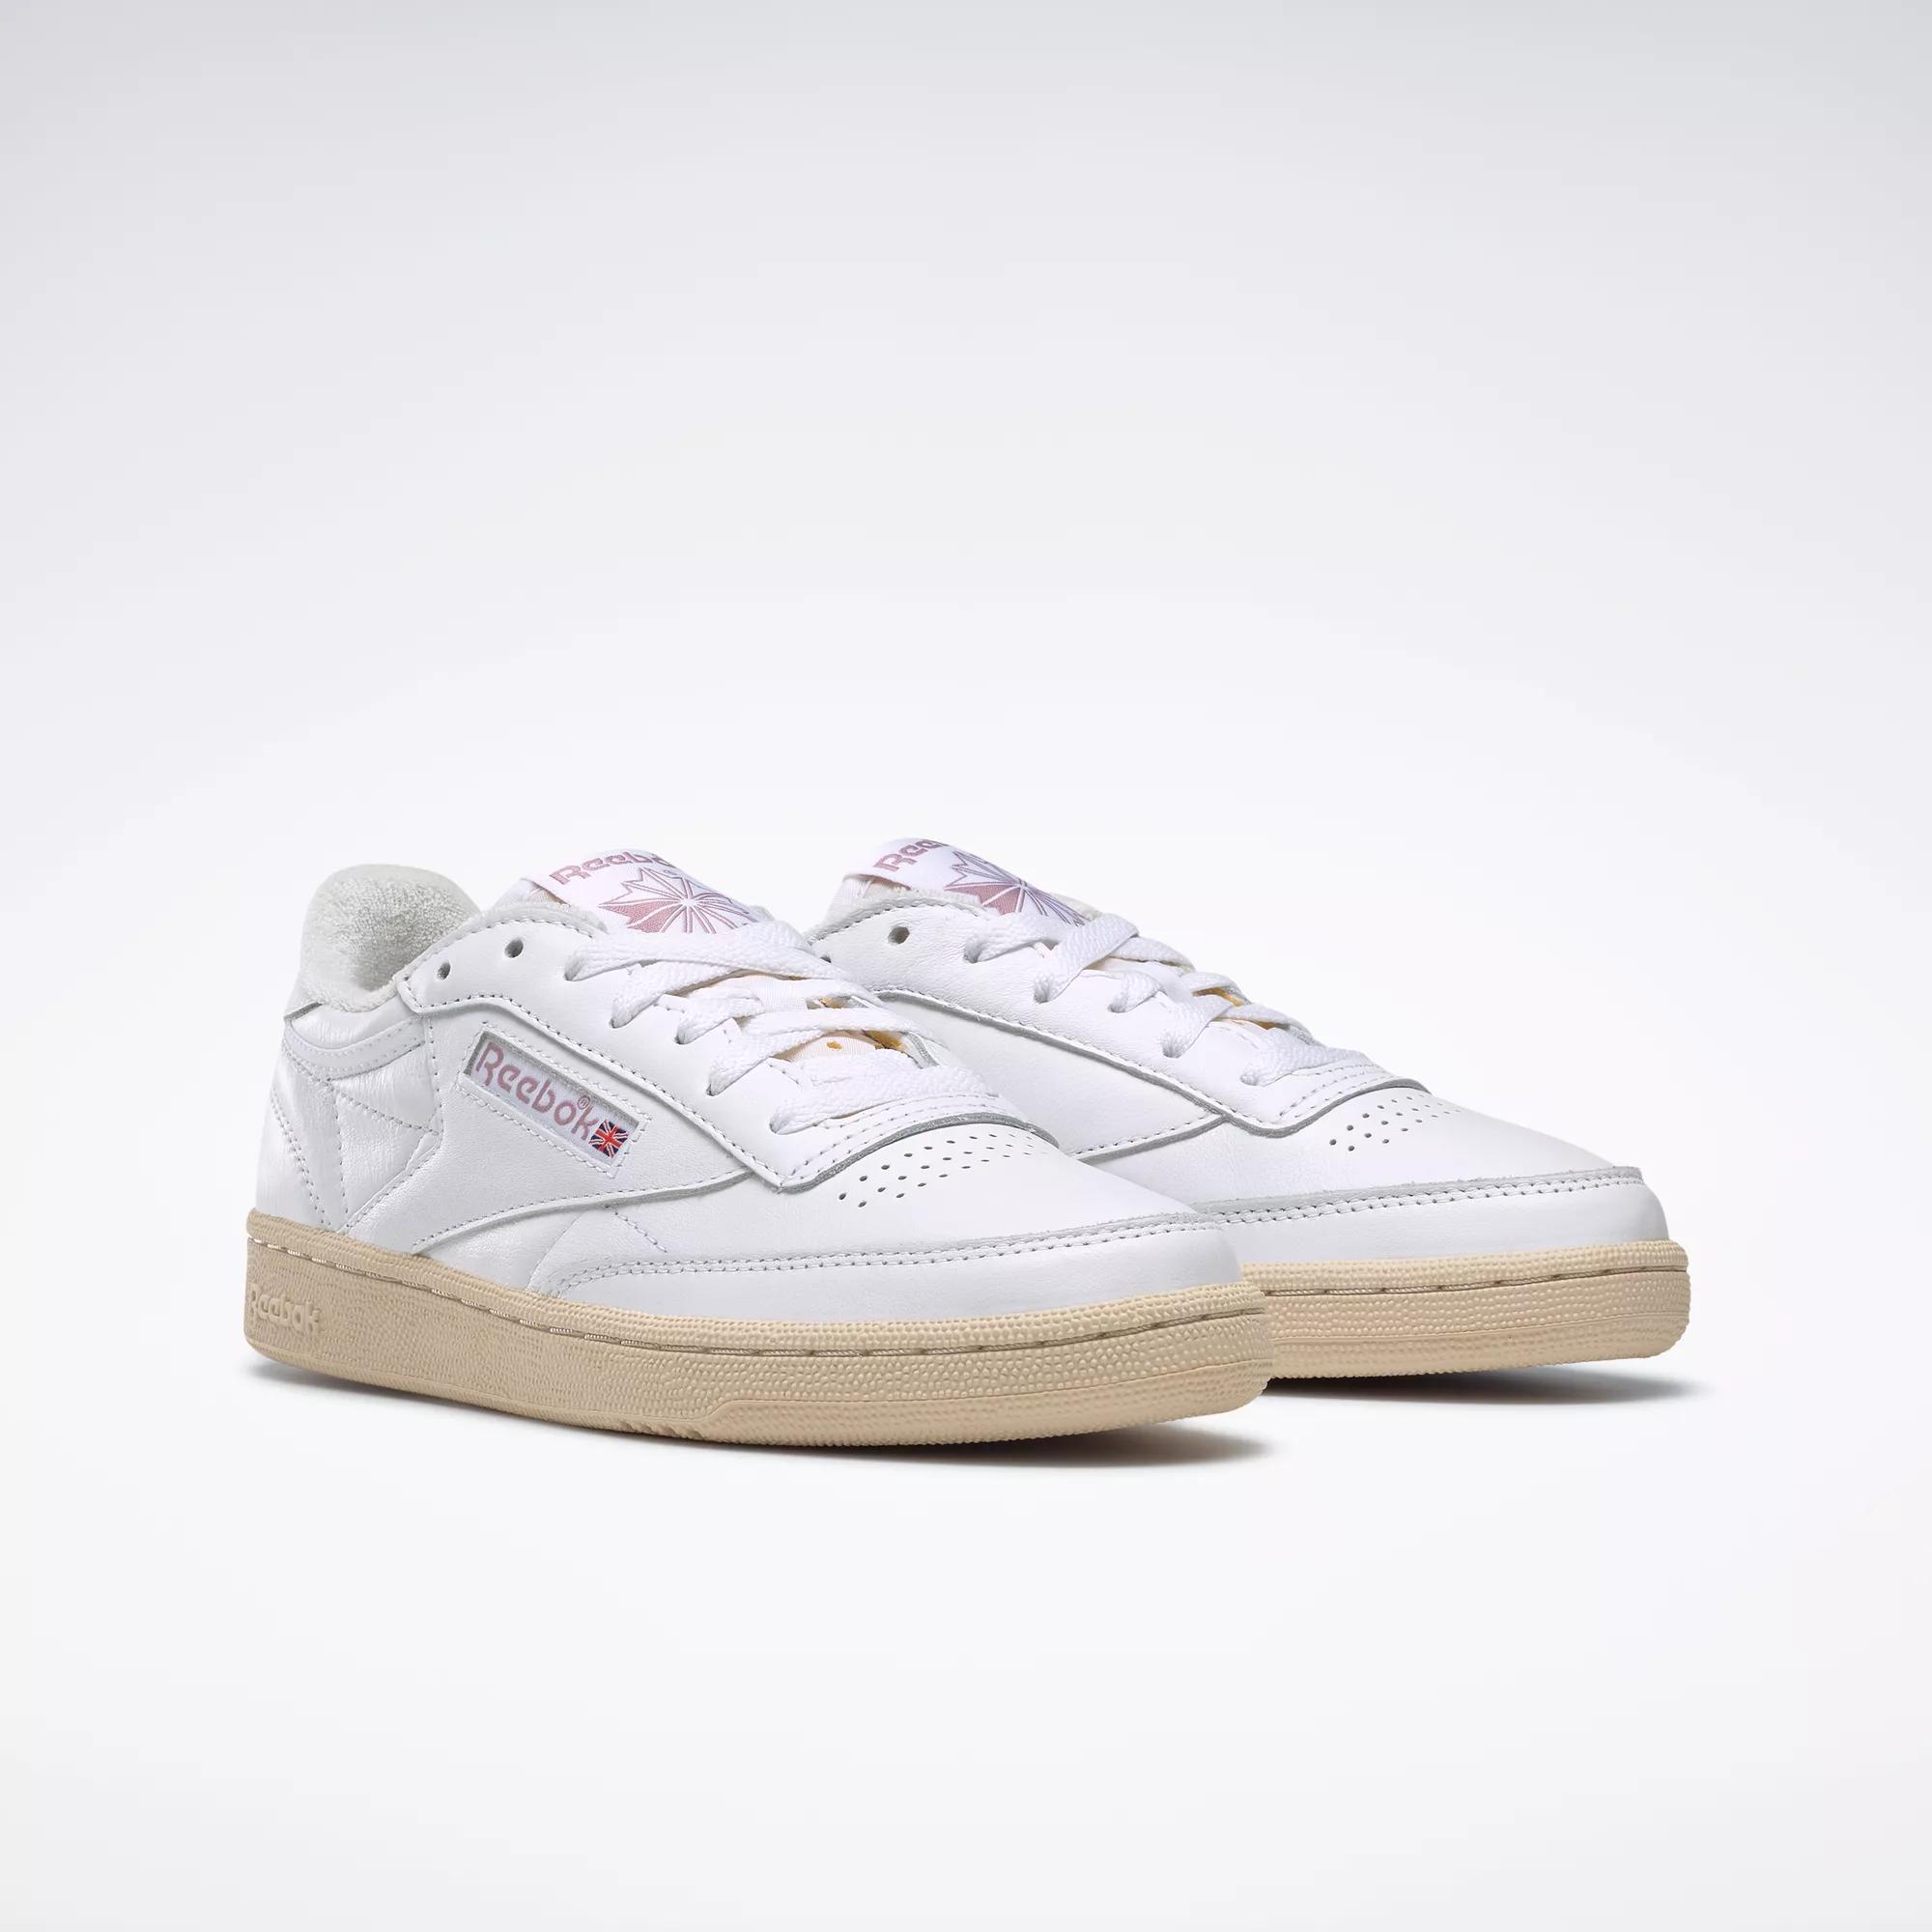 Club C 85 Vintage Shoes - White / Chalk / Infused Lilac | Reebok